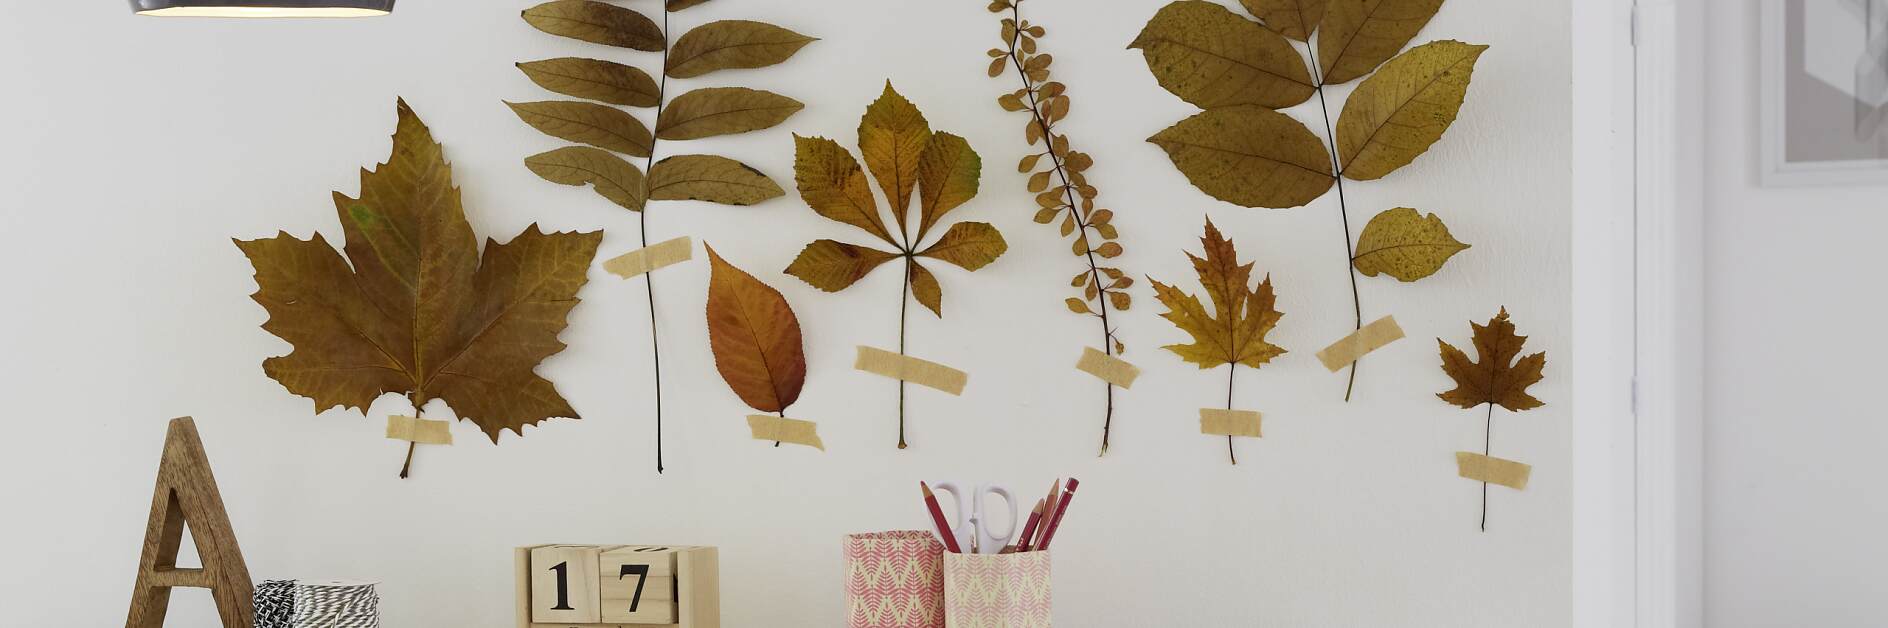 DIY Autumn Leaves Decoration Idea